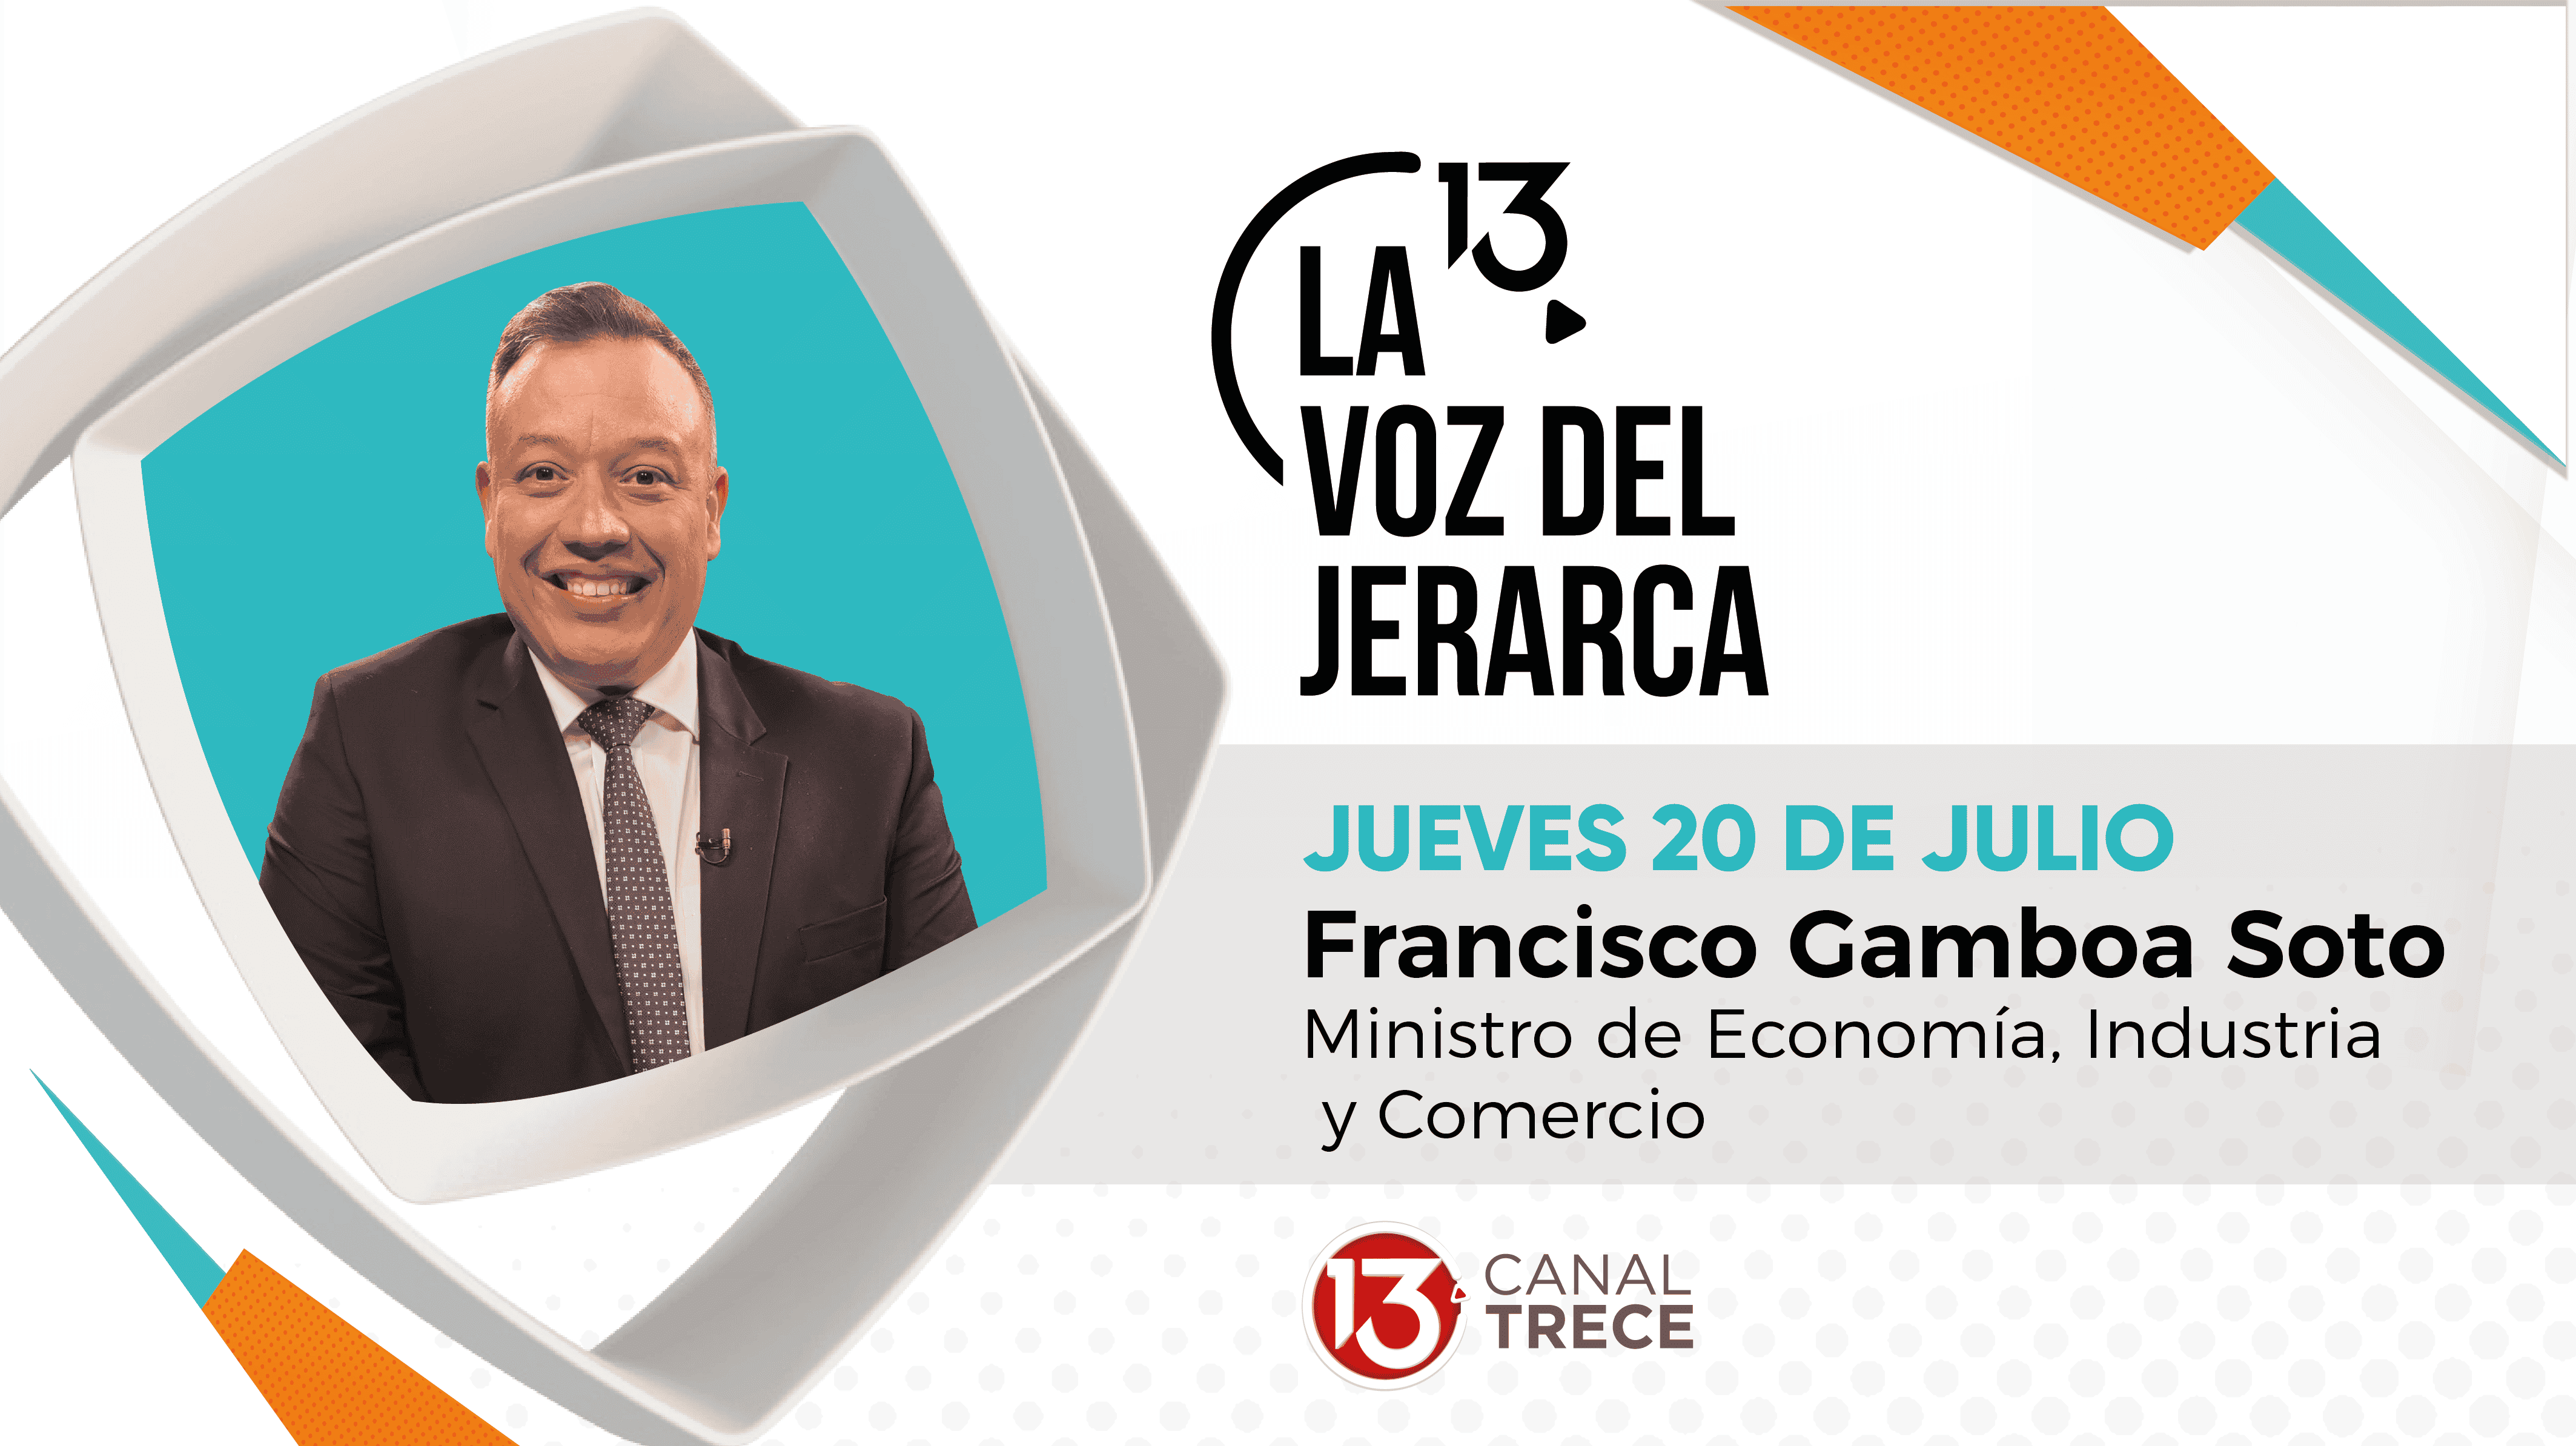 Francisco Gamboa Soto - Jueves 20 Julio | La Voz del Jerarca